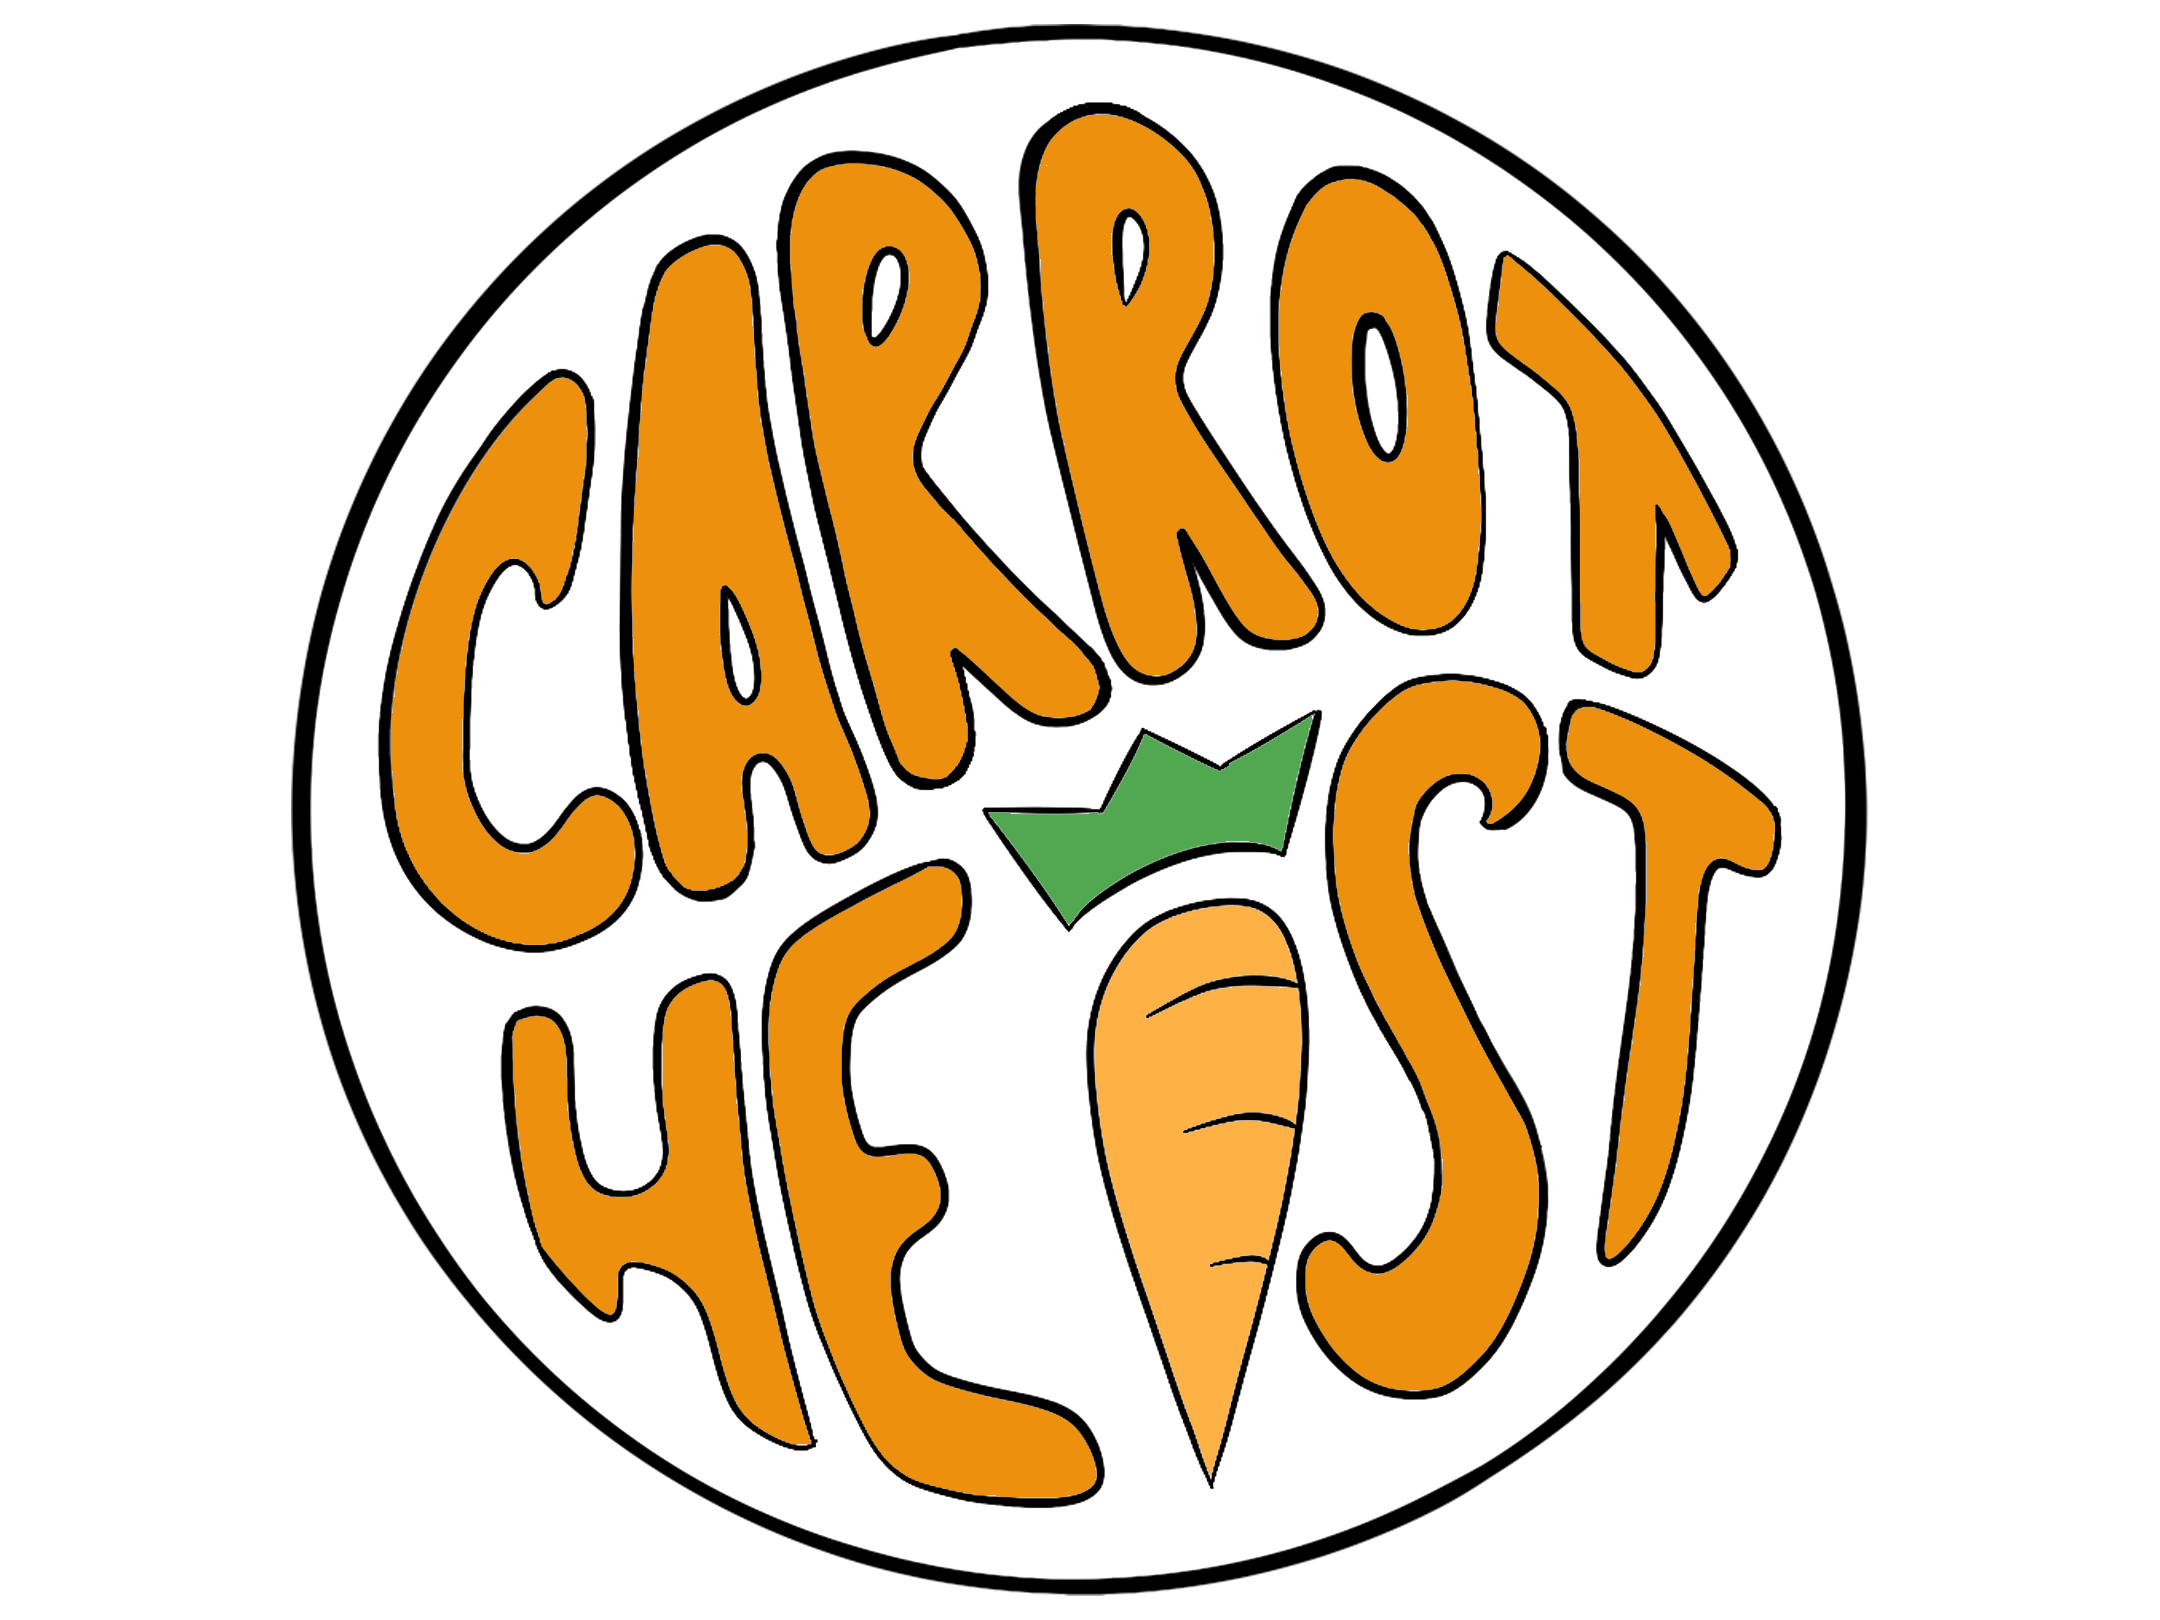 Carrot Heist